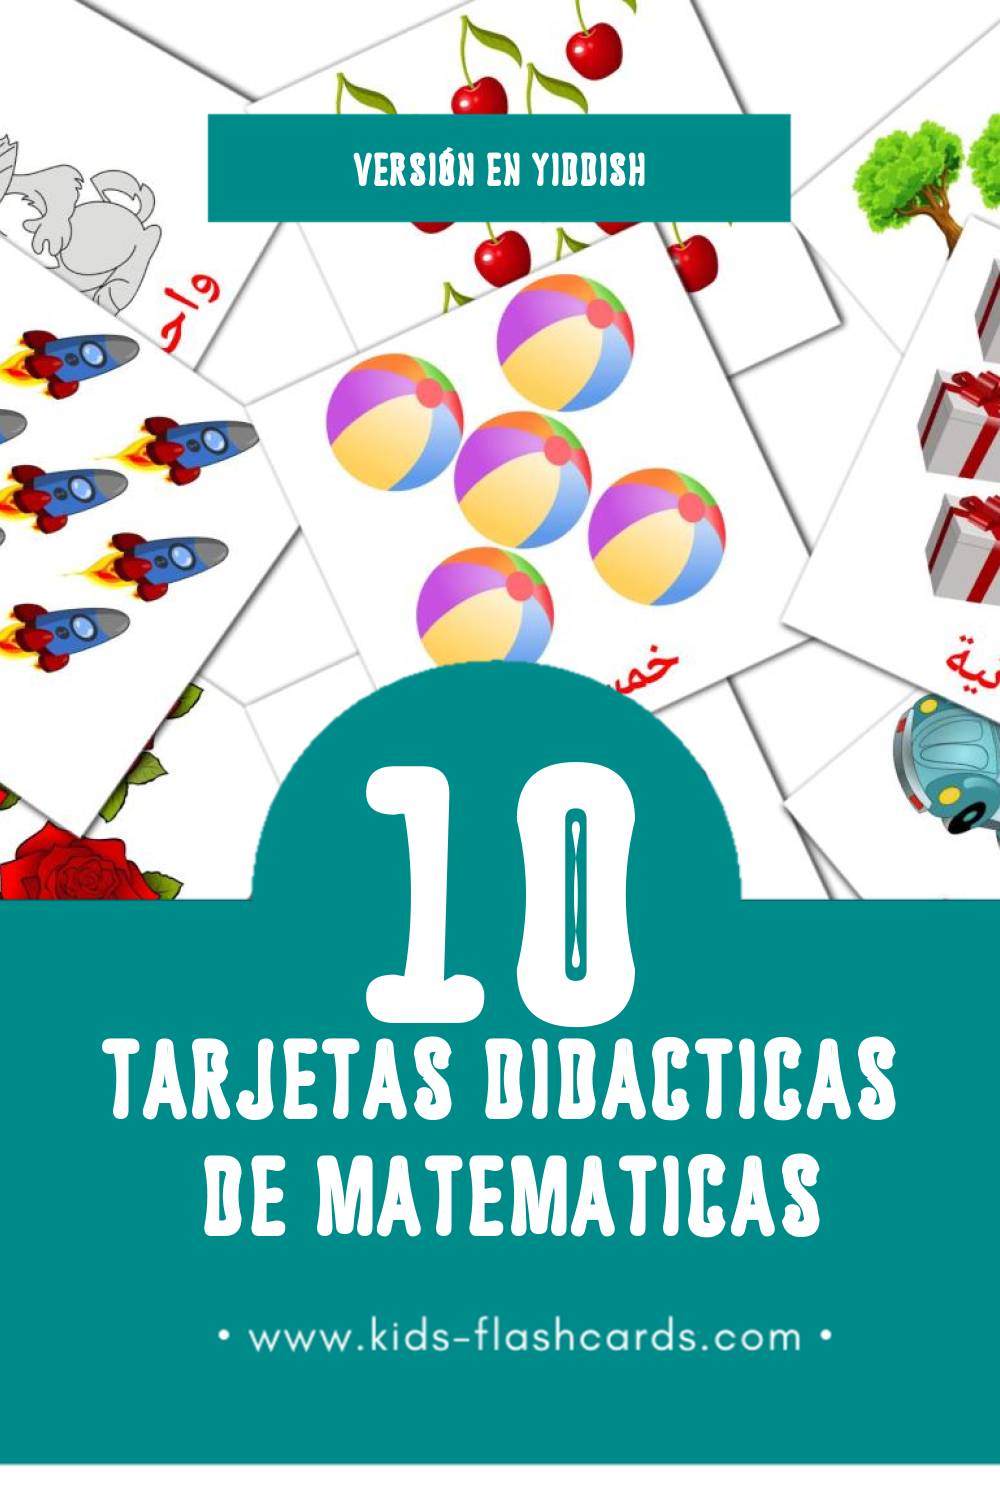 Tarjetas visuales de رياضيات  para niños pequeños (10 tarjetas en Yiddish)